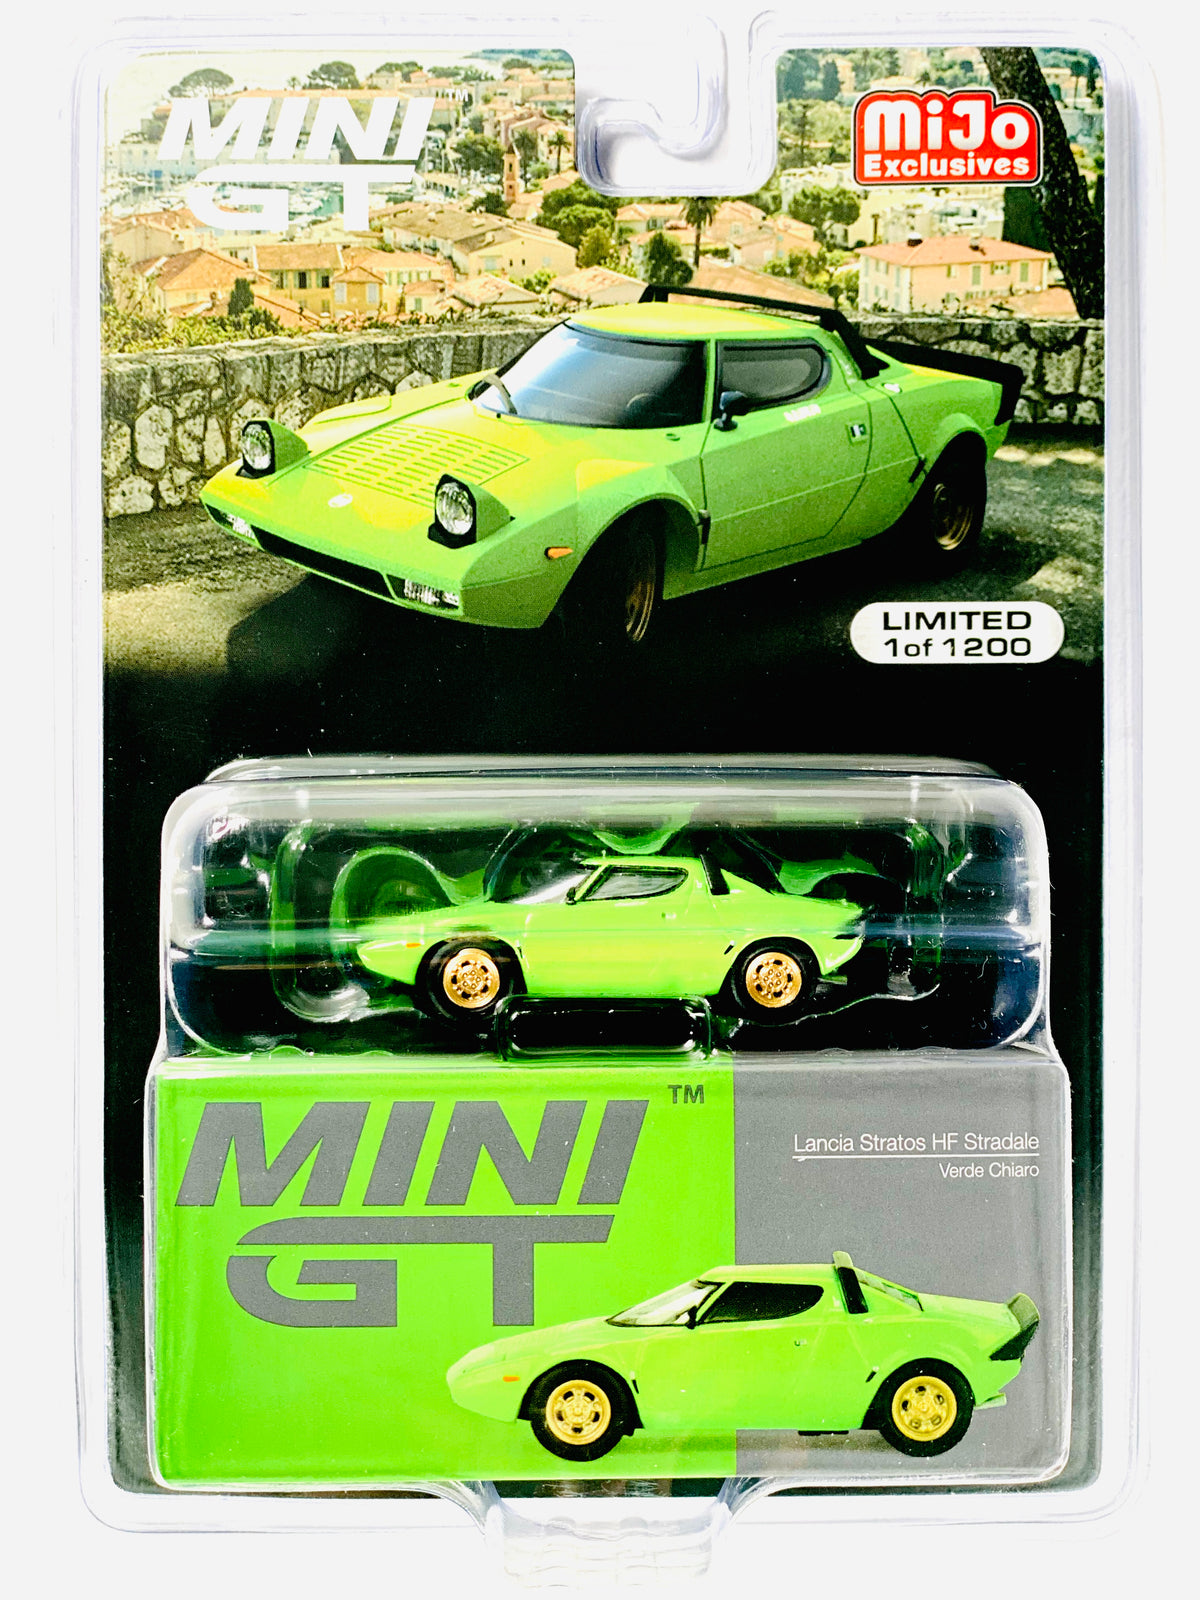 Mini GT Mijo Exclusives Lancia Stratos HF Stradale Verde Chiaro #625